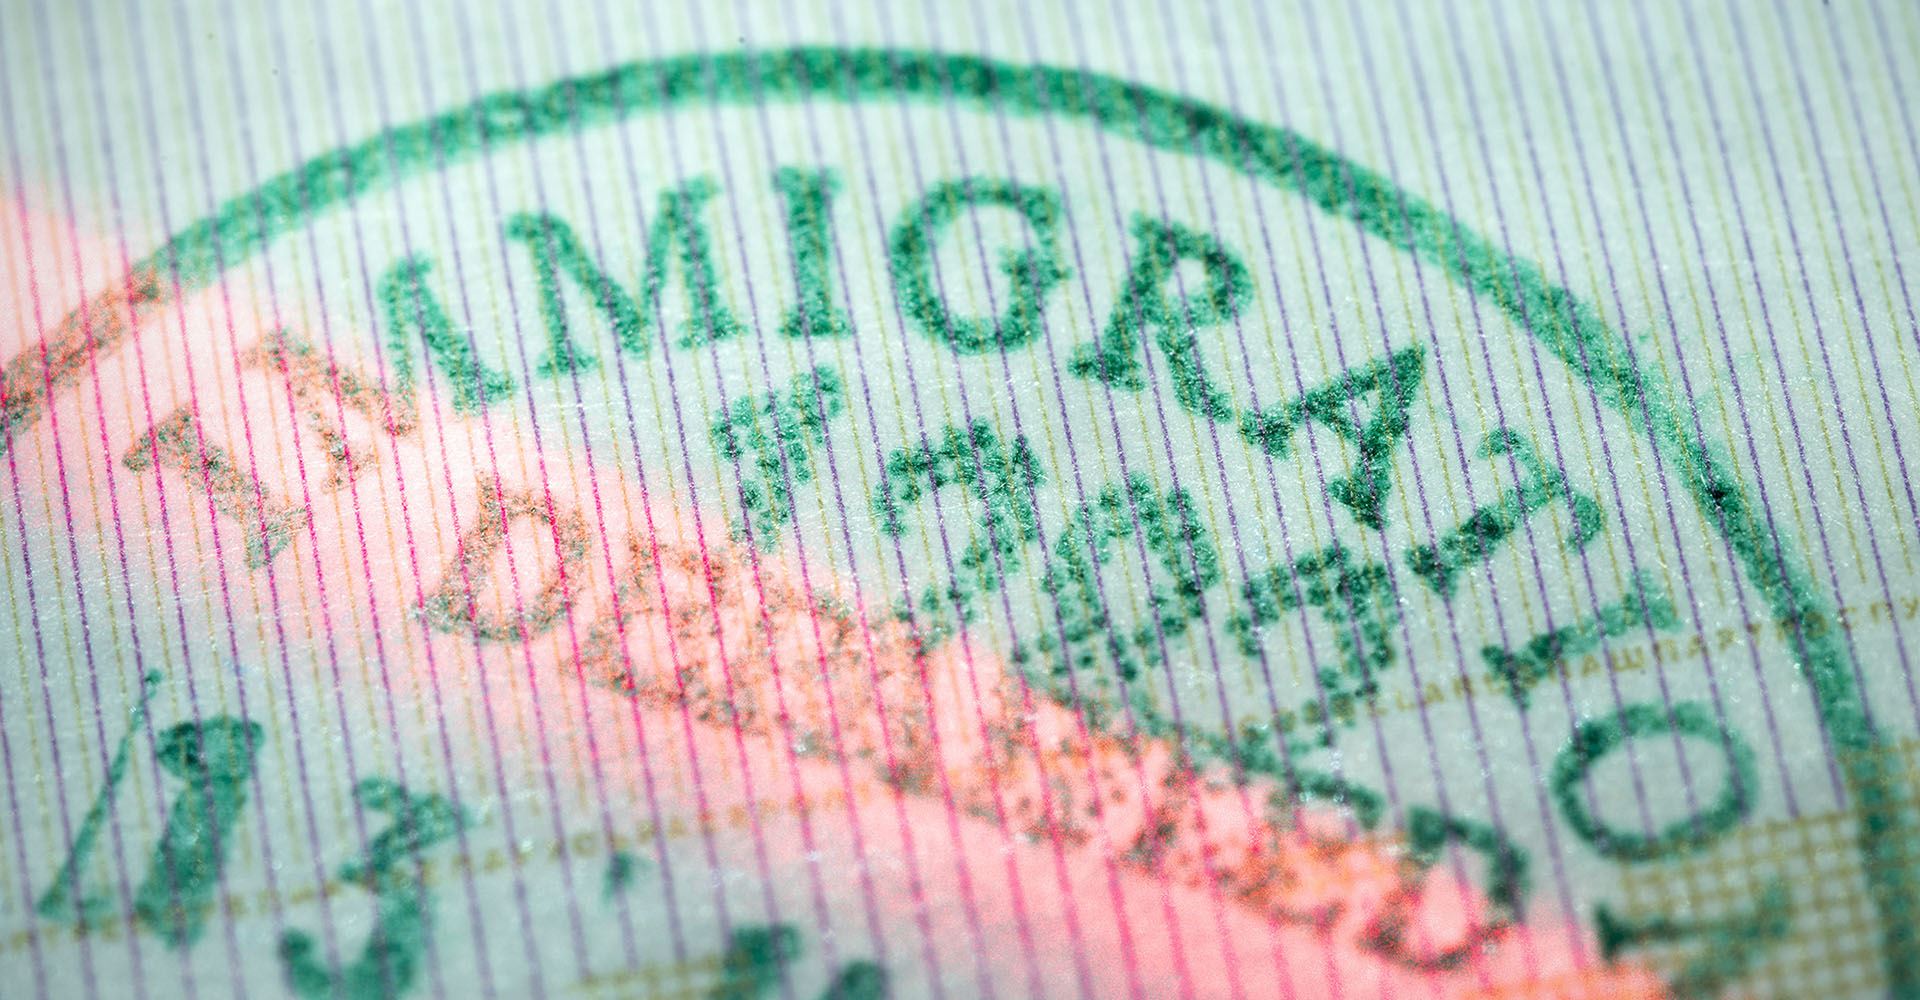 Immigration Stamp